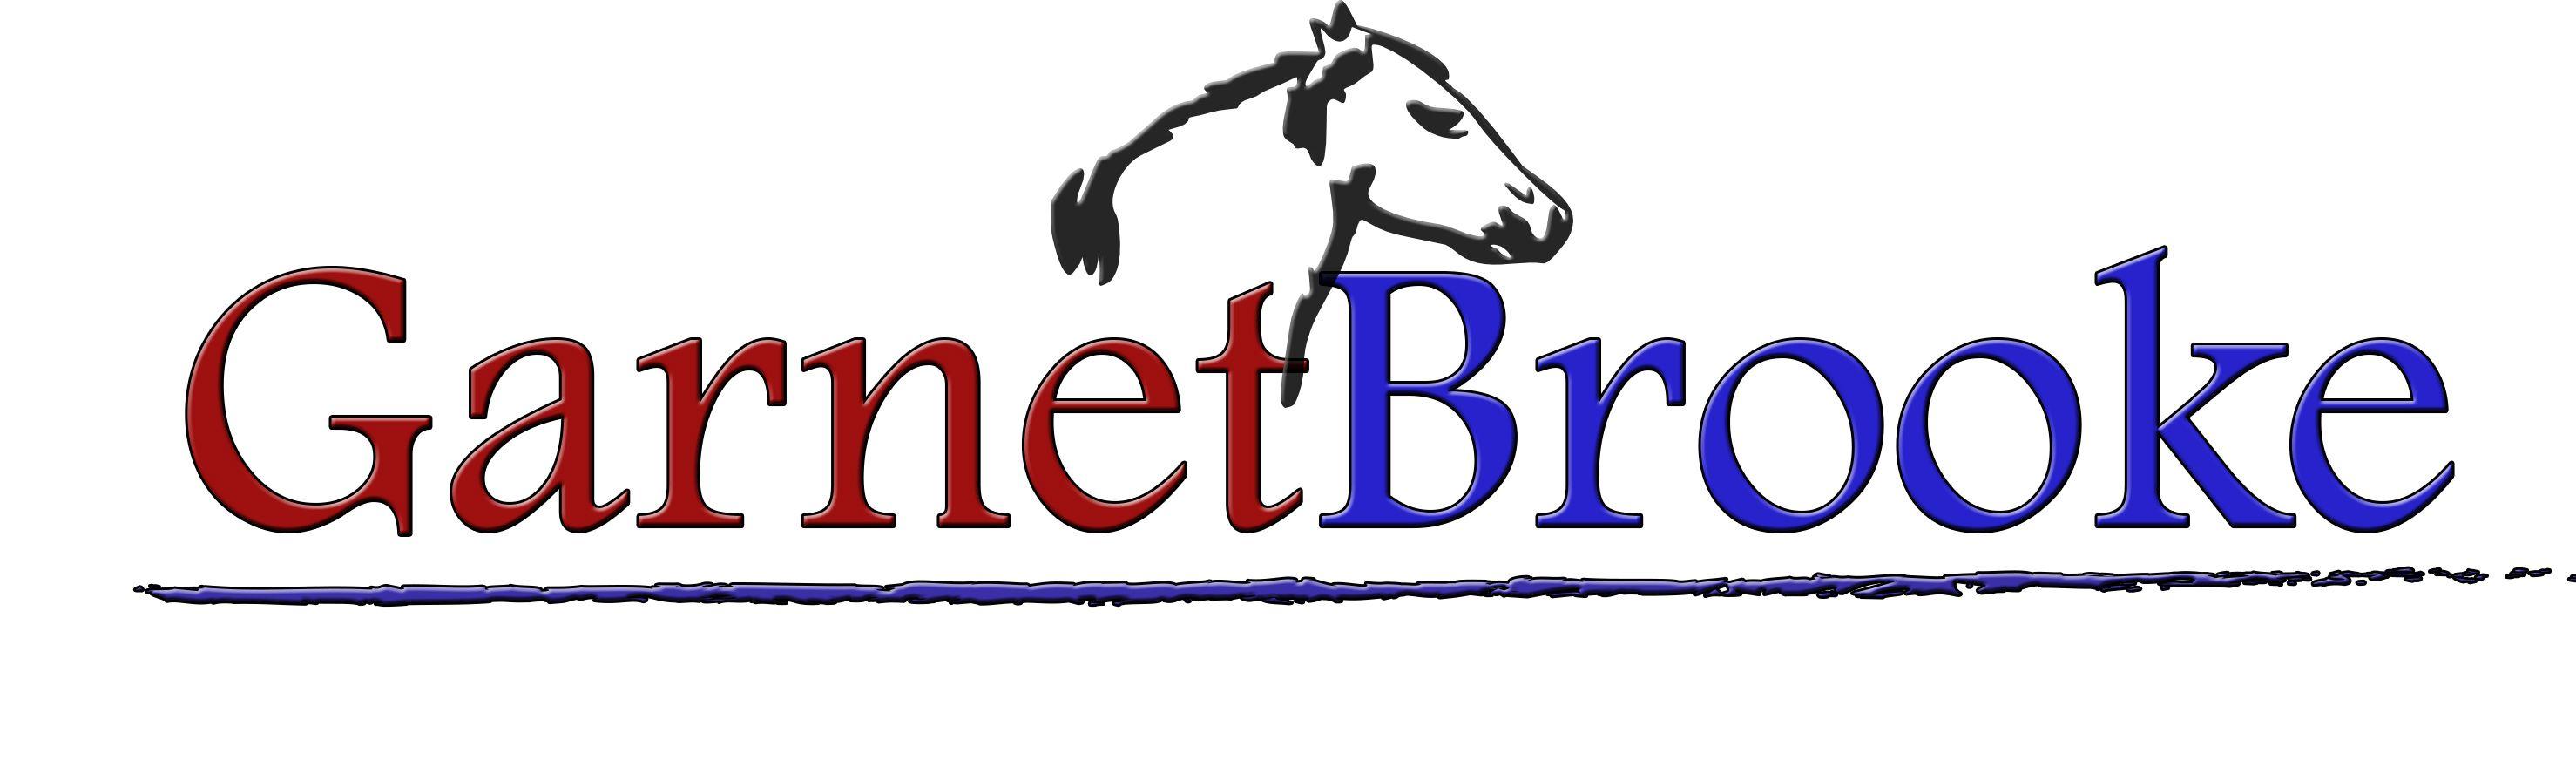 Thoroughbred Logo - The logo for GarnetBrooke, the thoroughbred horse farm across